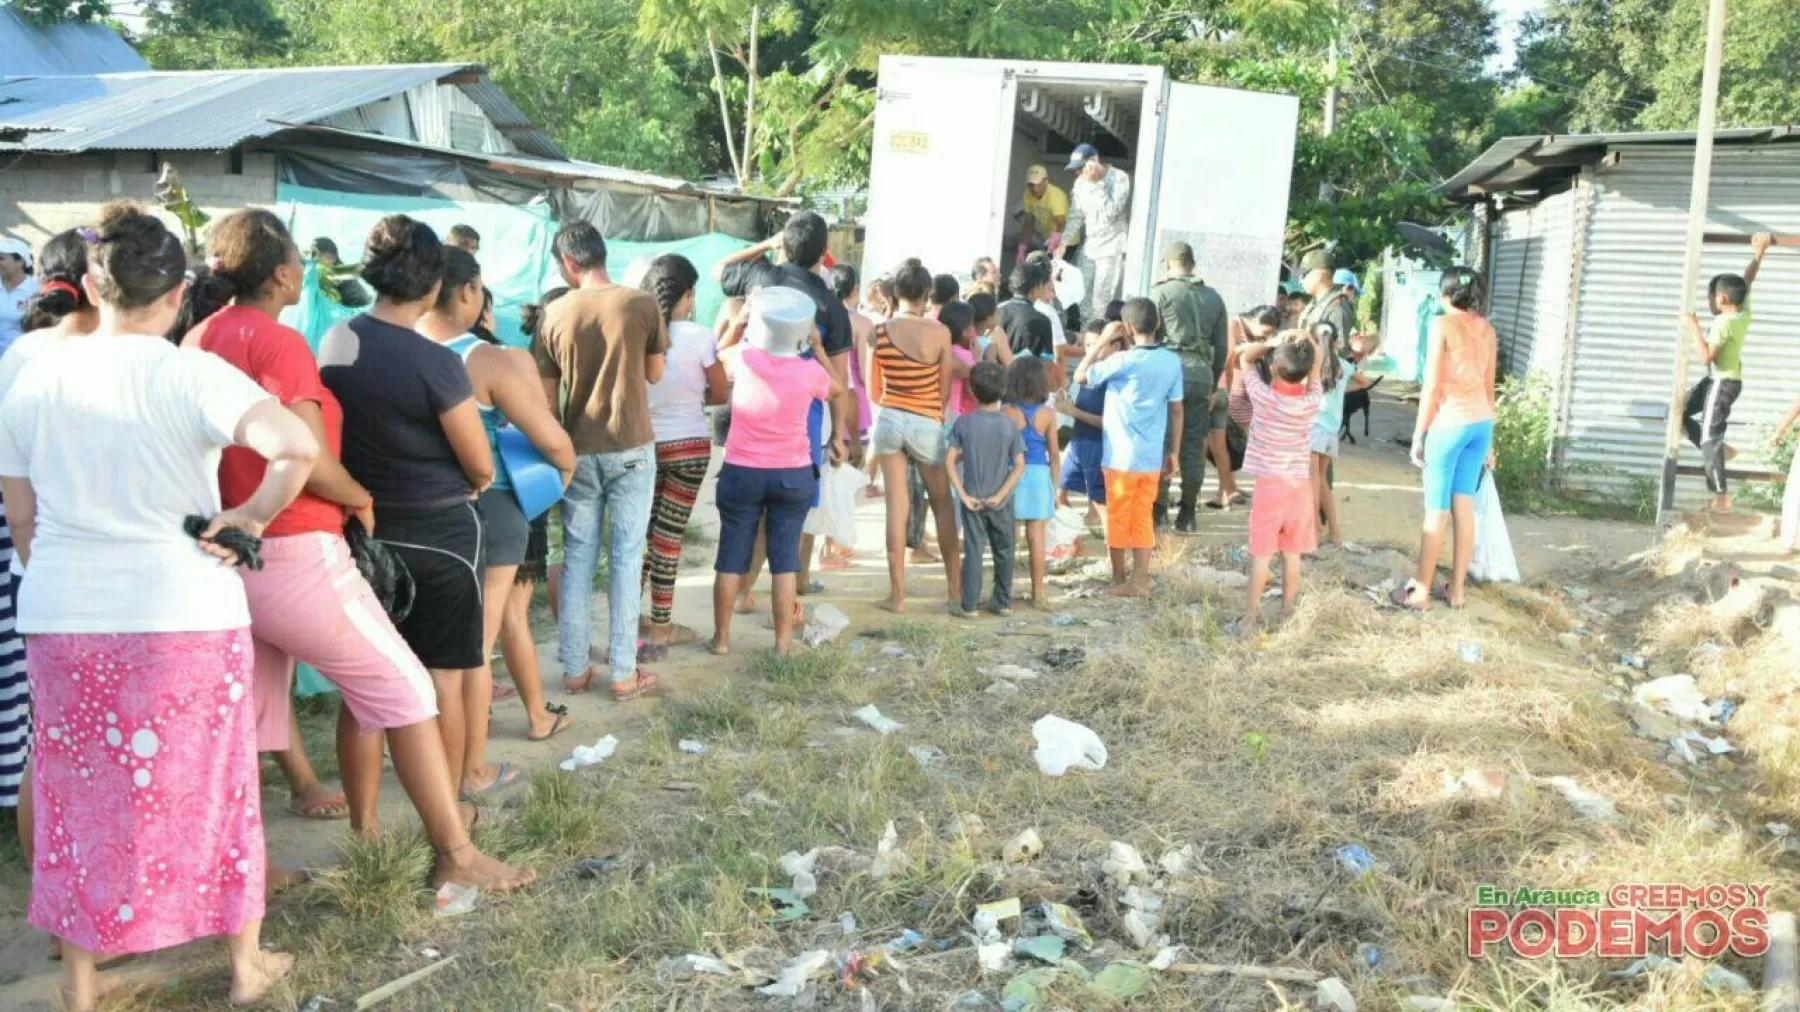 Dos toneladas de pescado de contrabando que incautó la Dian fue entregado por autoridades de Arauca, a comunidades vulnerables del municipio.